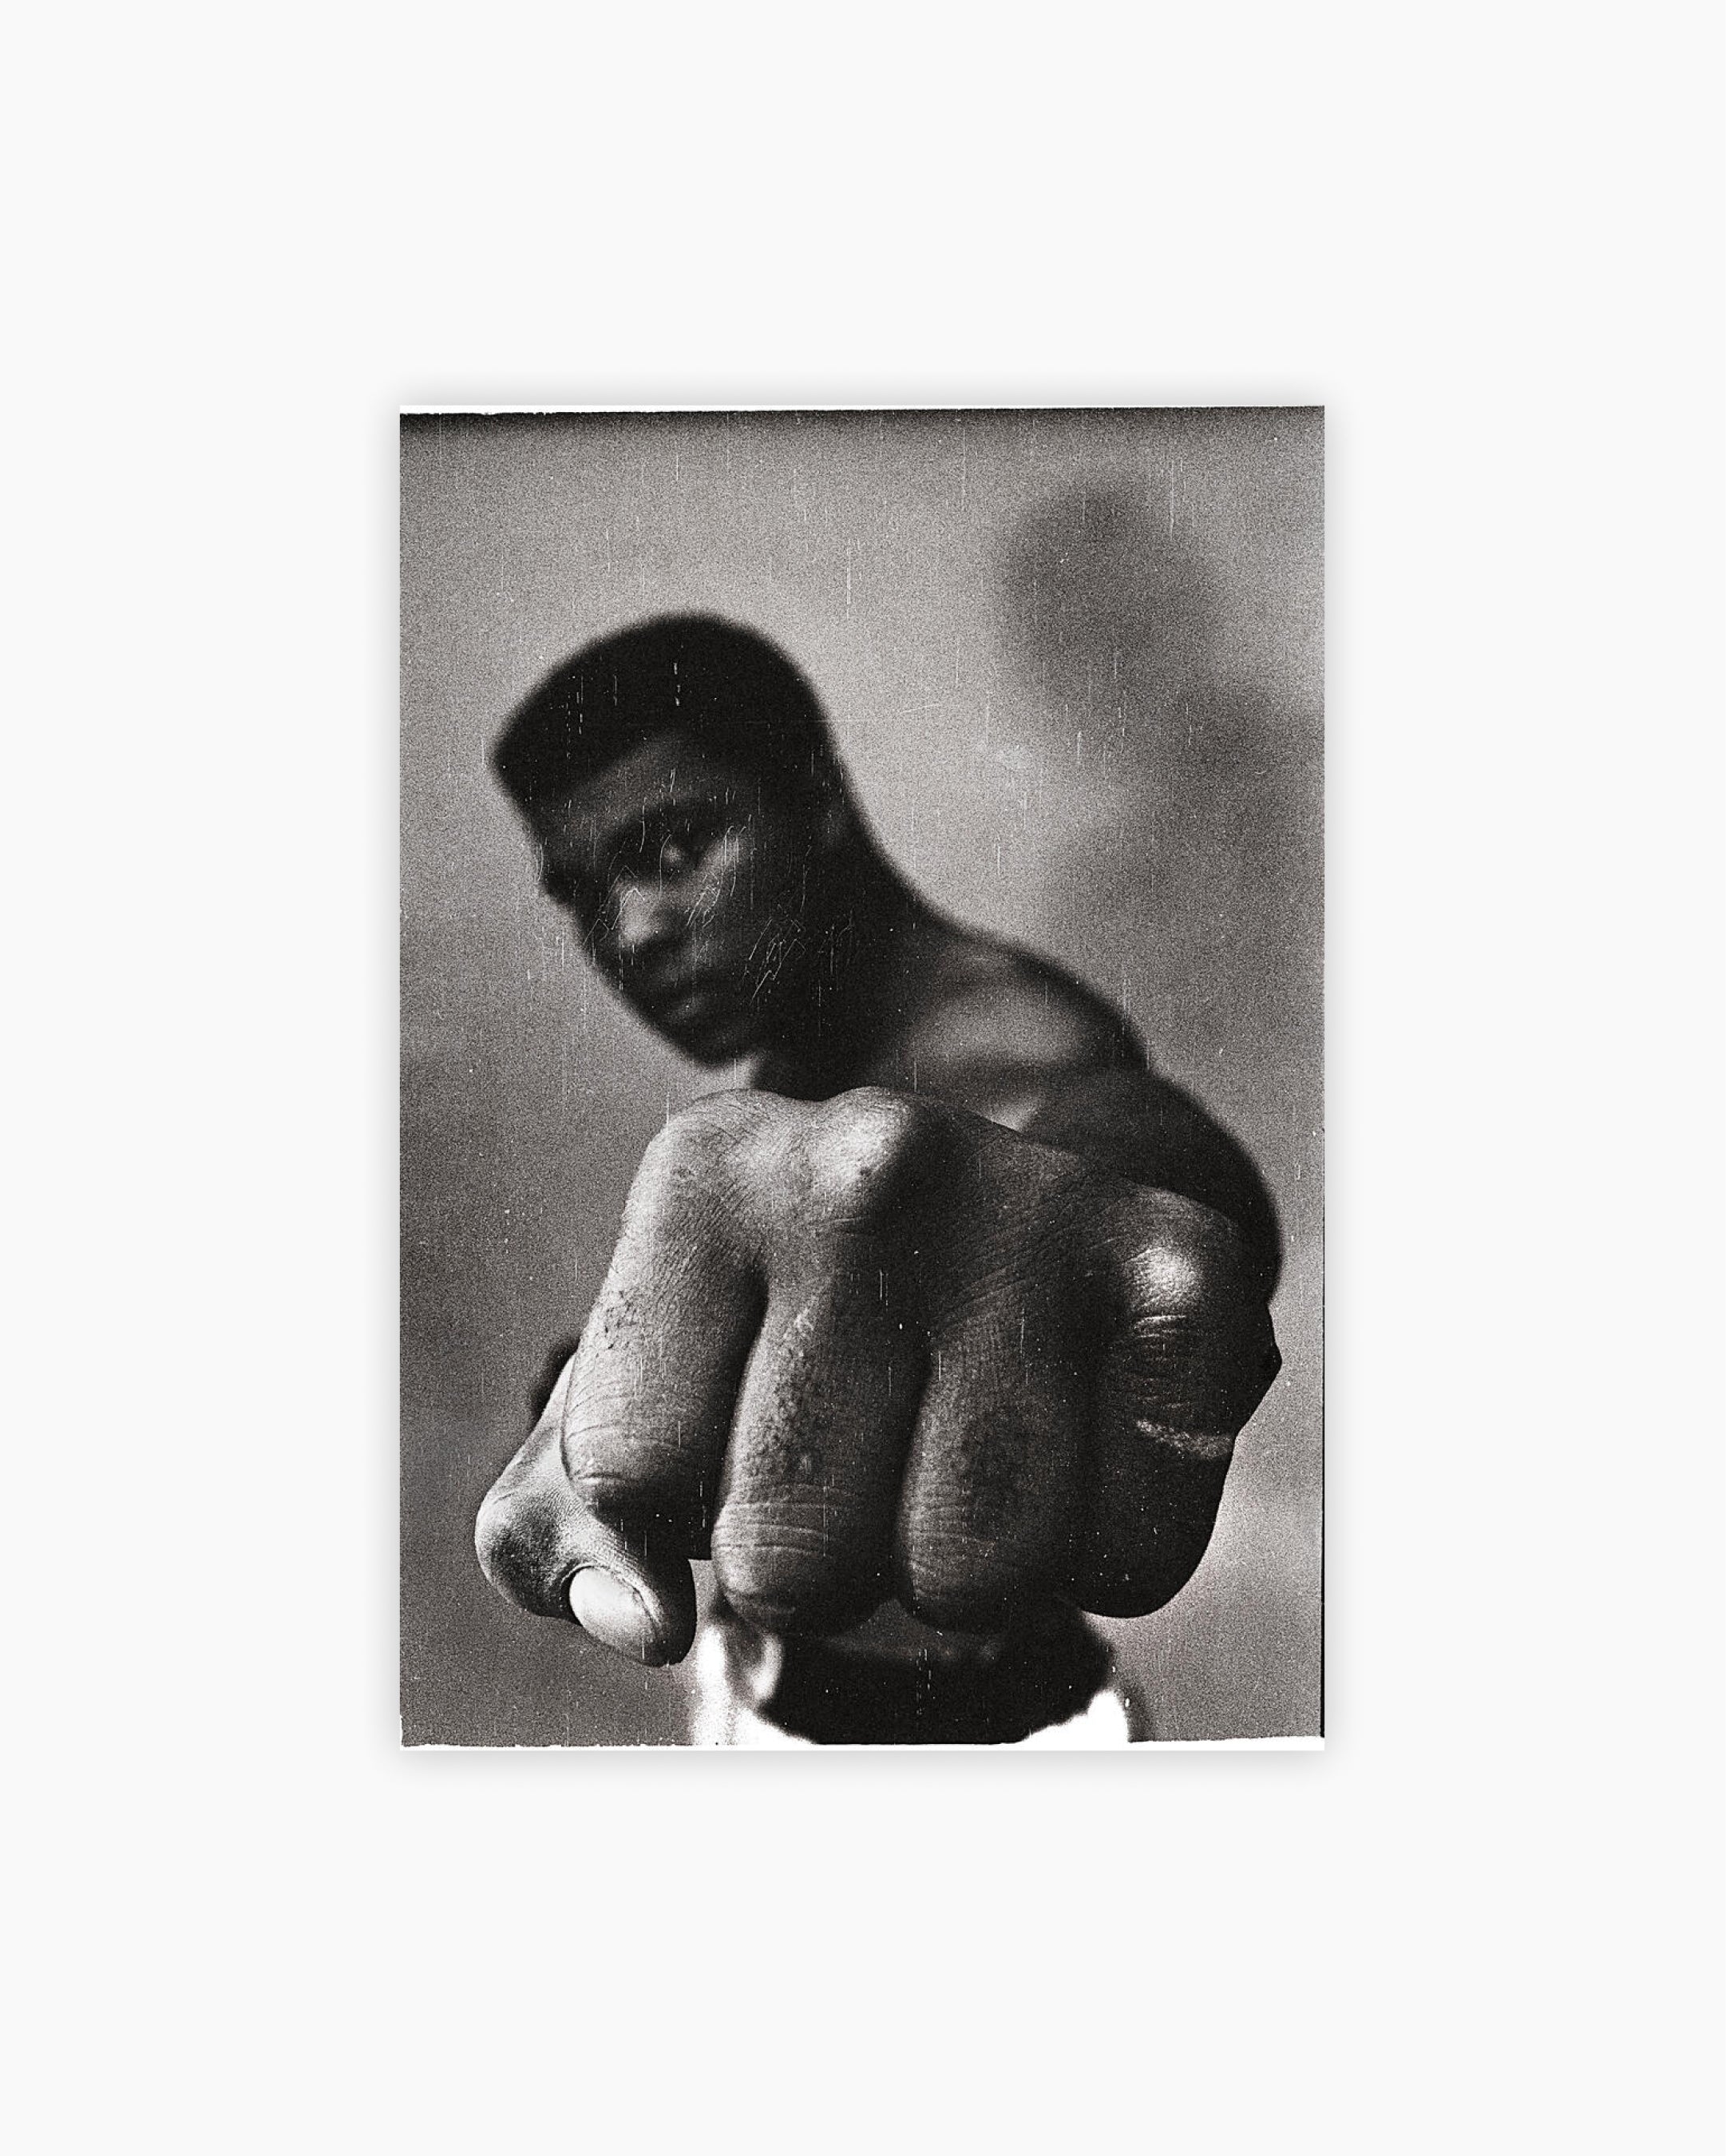 Muhammad Ali. Chicago river, Illinois, 1966